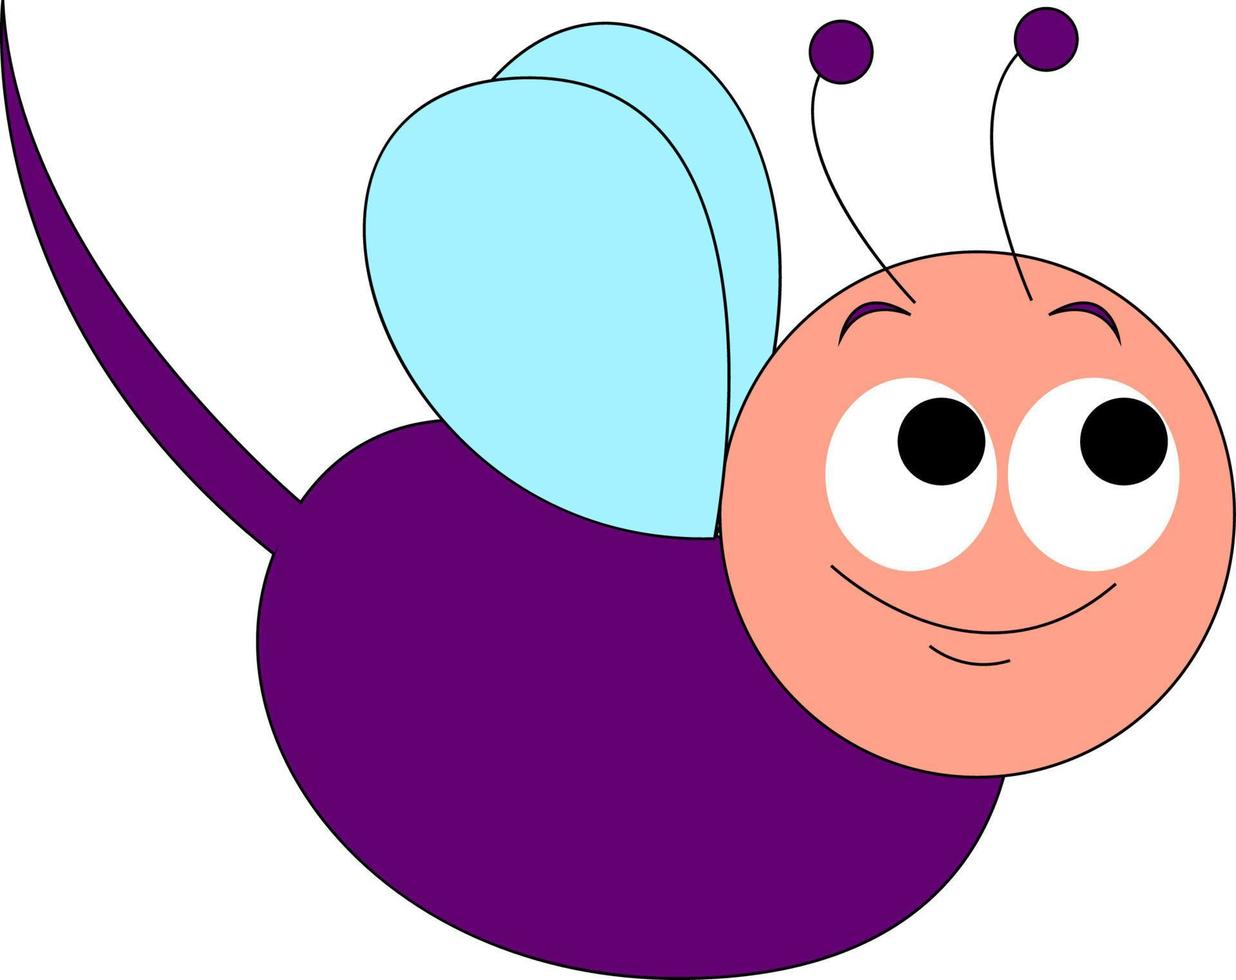 Happy purple mosquito, illustration, vector on white background.